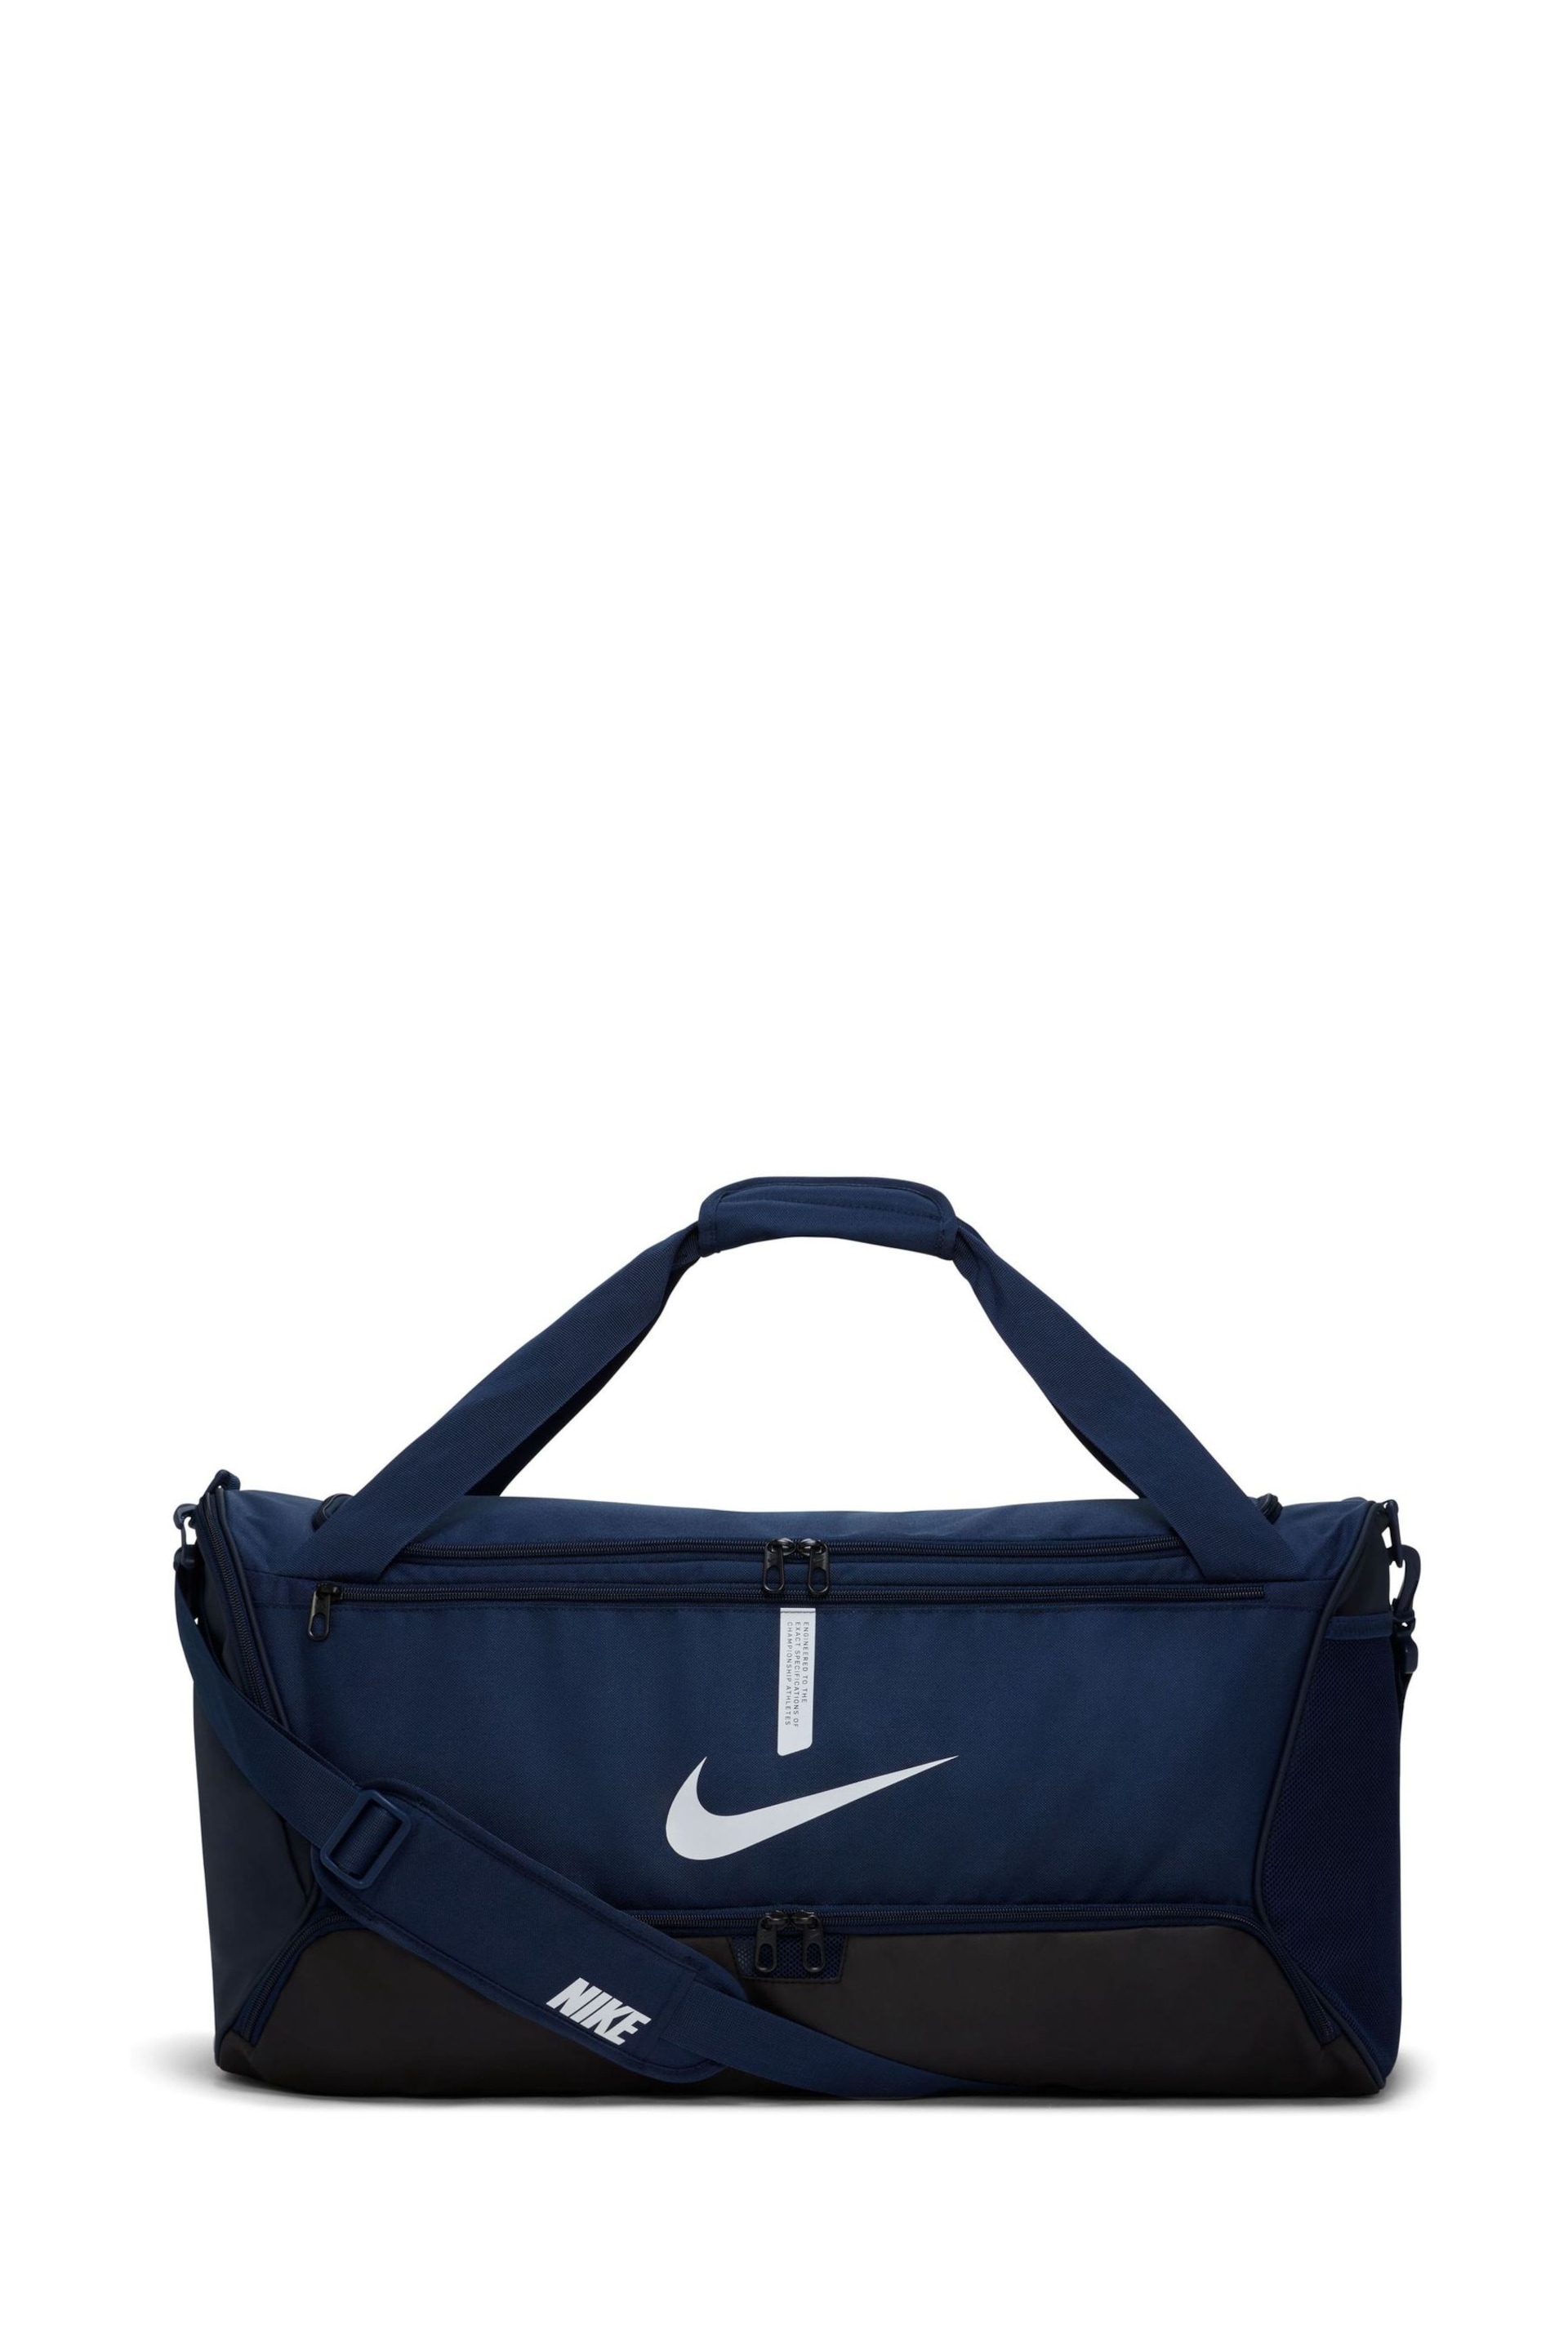 Nike Blue Medium Academy Team Football Duffel Bag 60L - Image 1 of 11